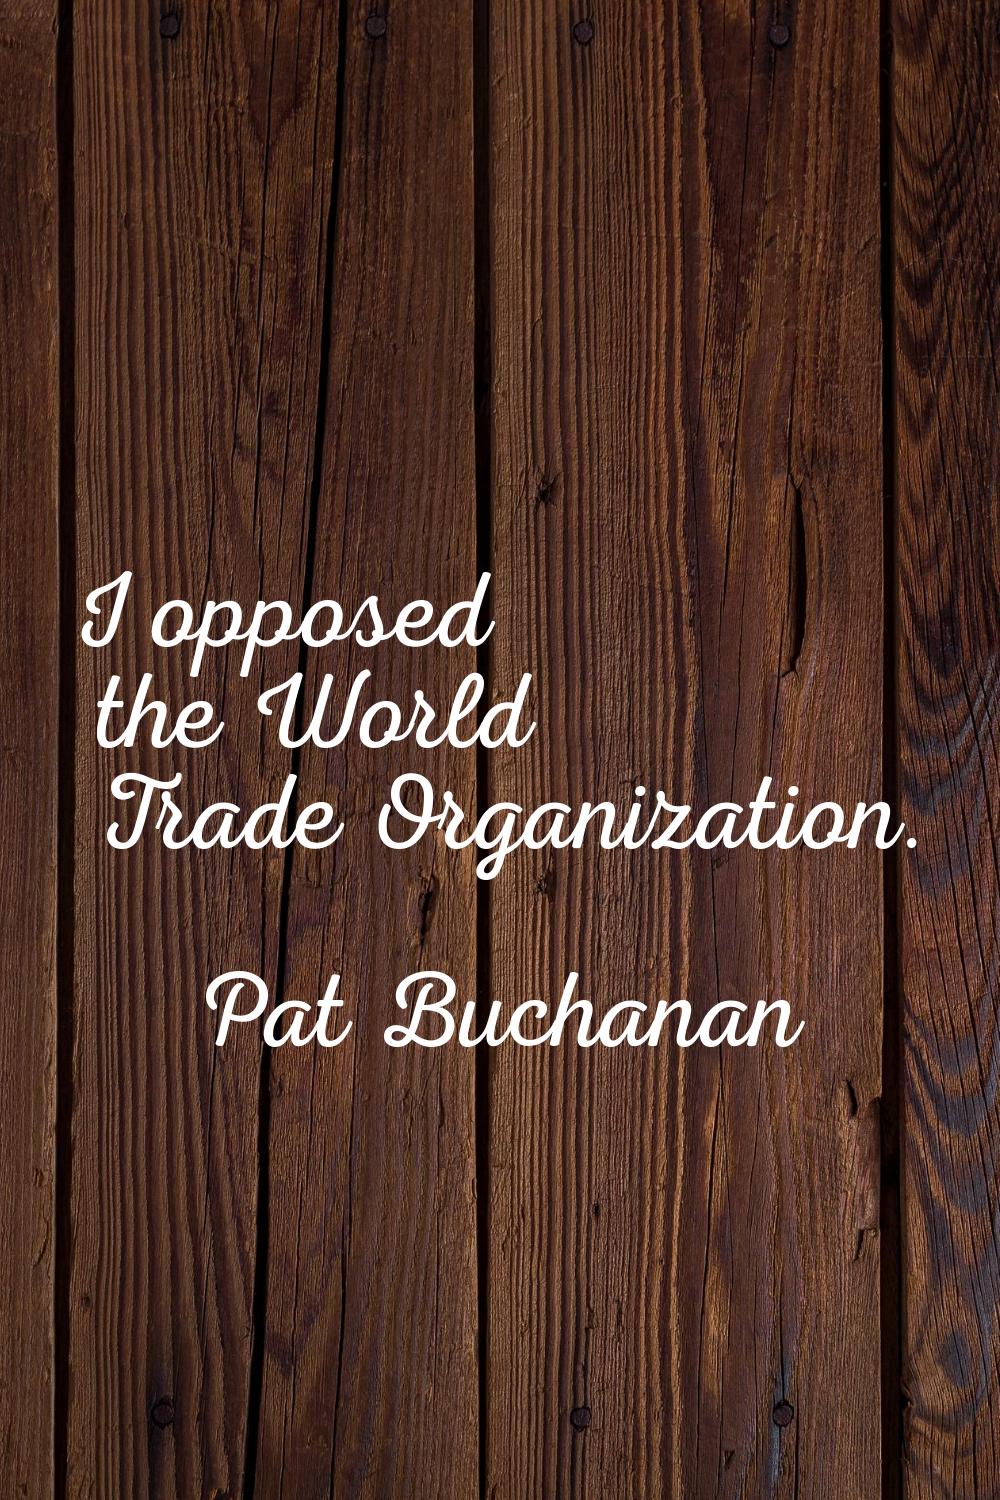 I opposed the World Trade Organization.